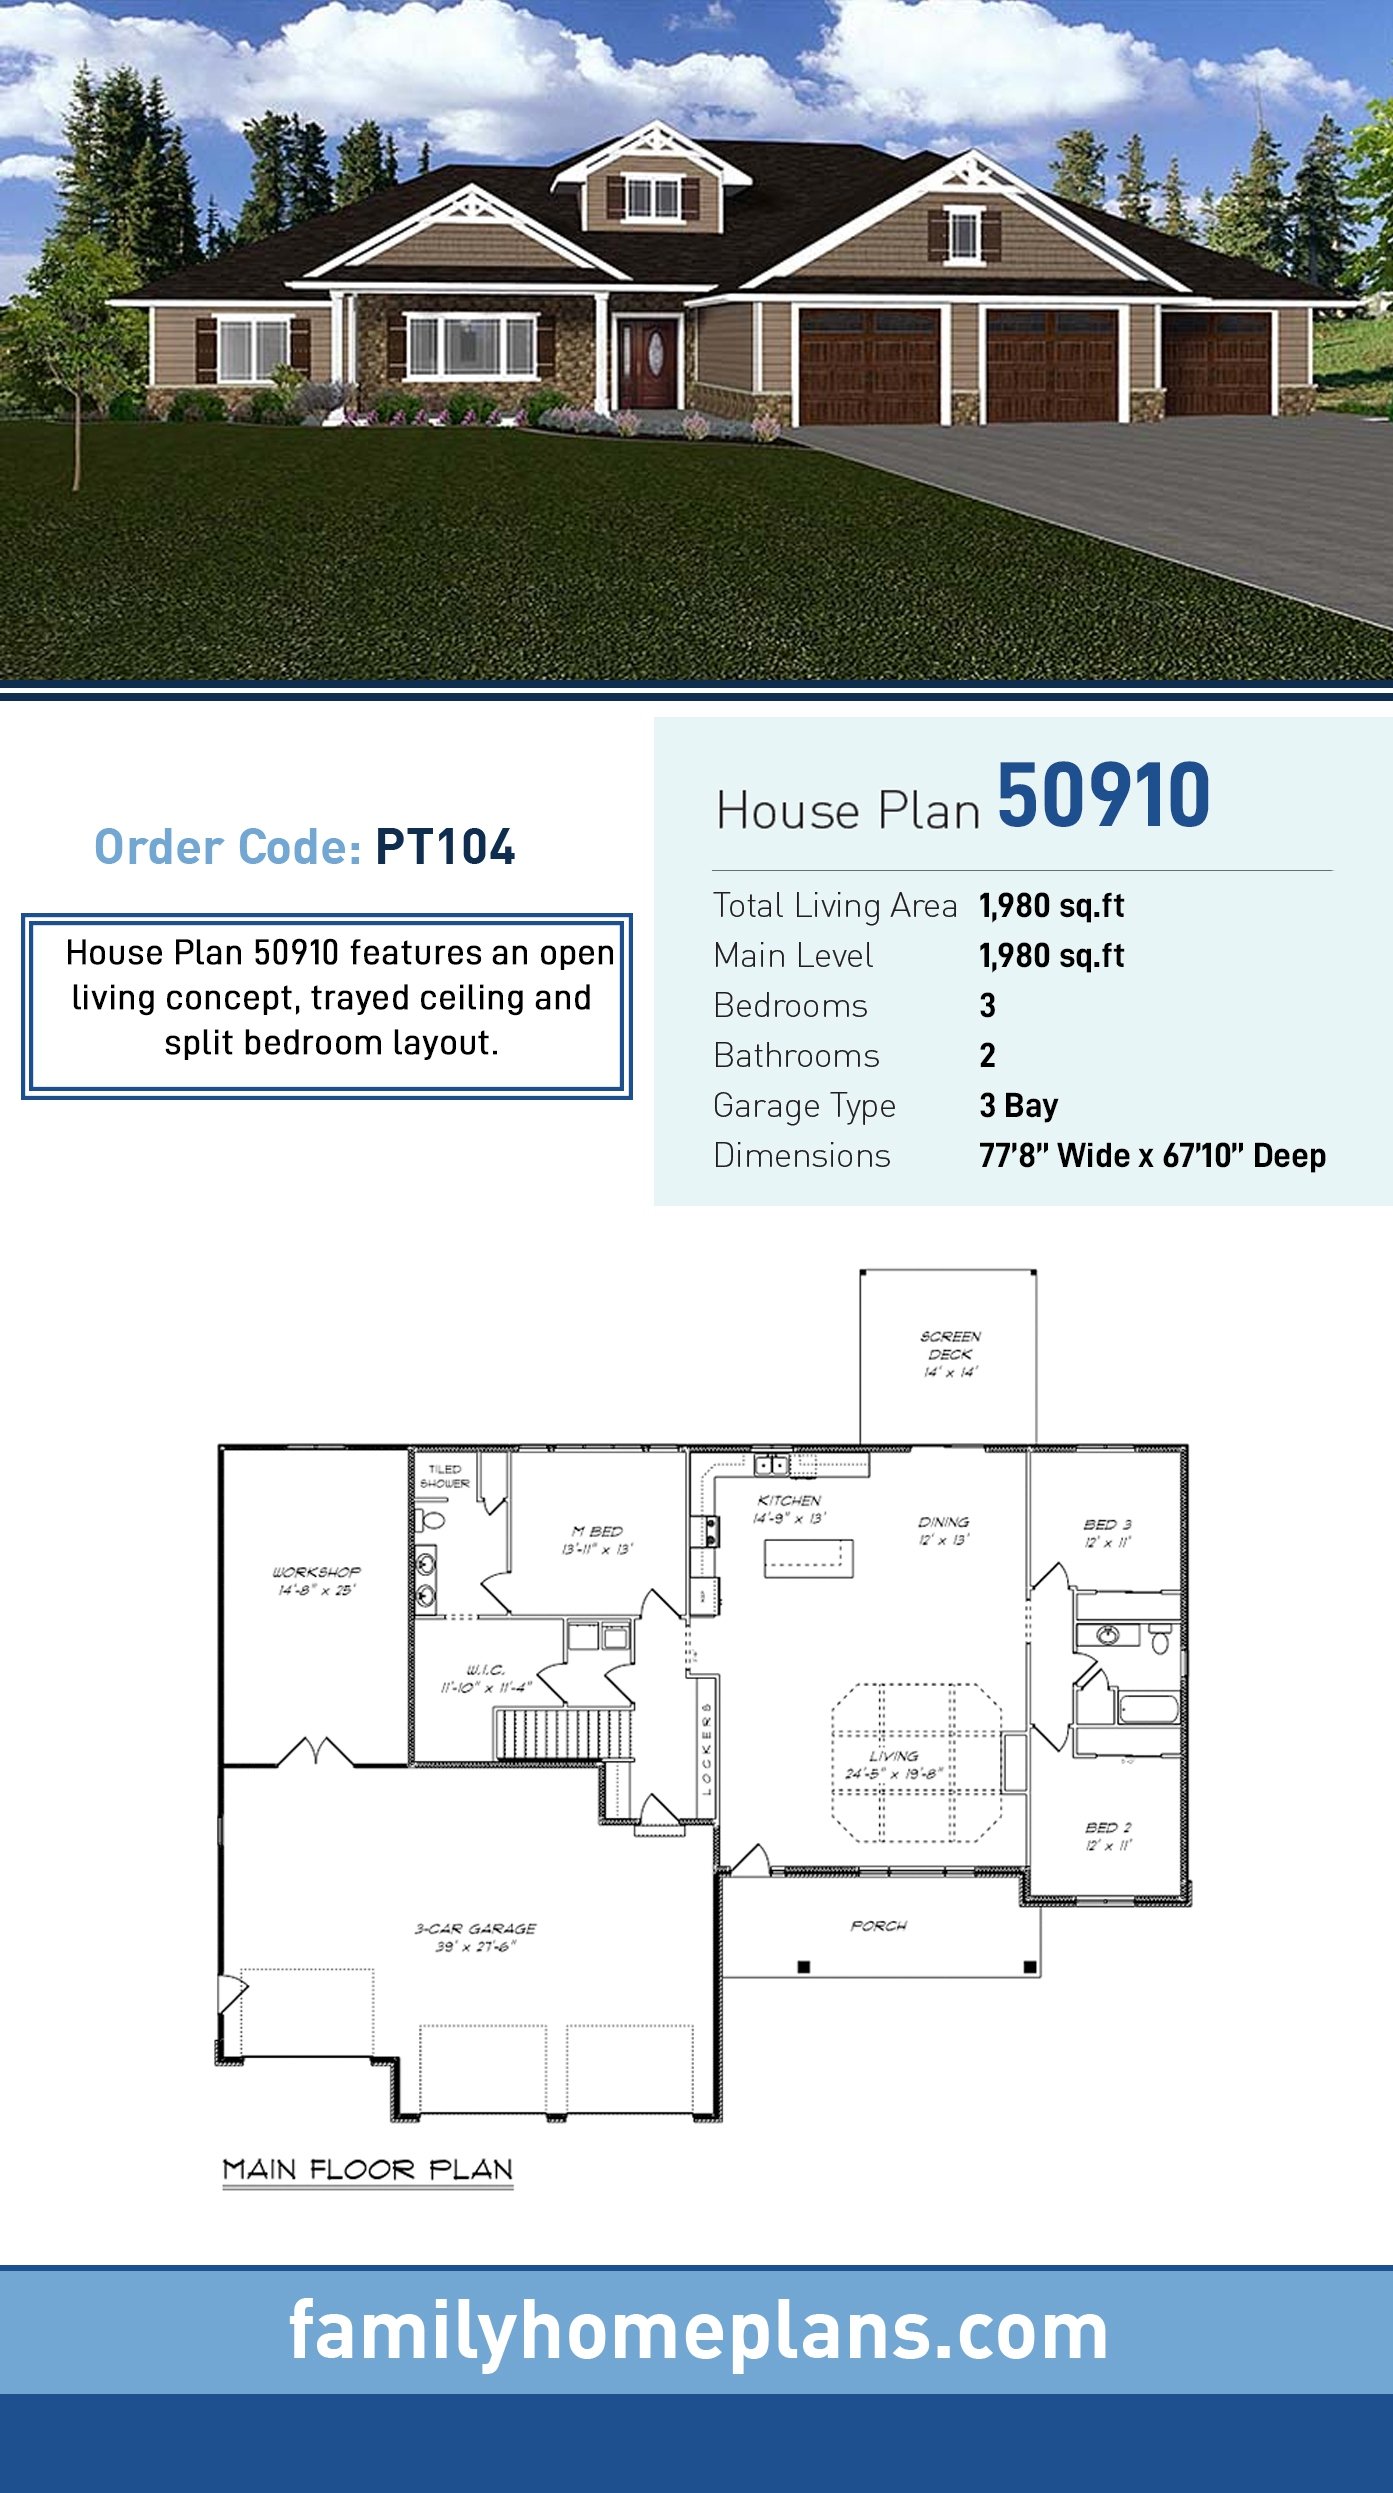 House Plan 50910